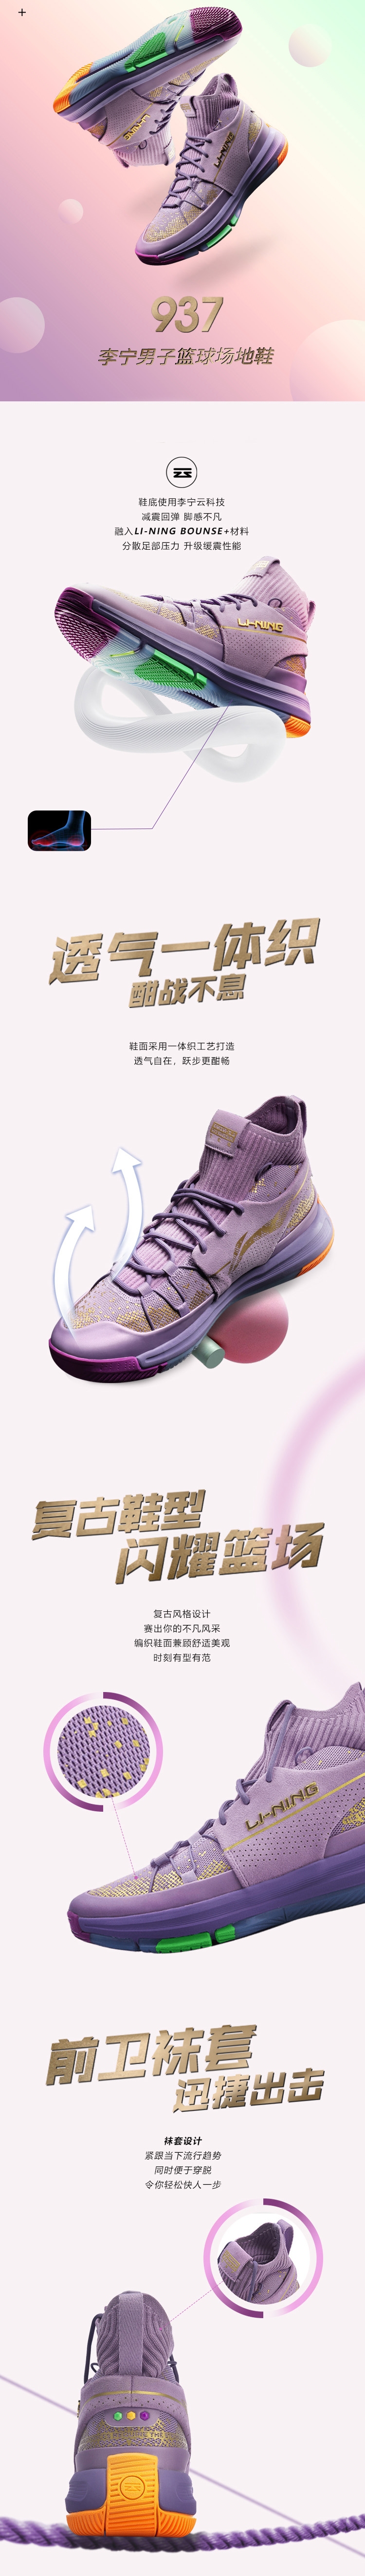 2019 New Li-Ning 937 Retro "Thanos" High Tops Men's On Court Basketball Sneakers